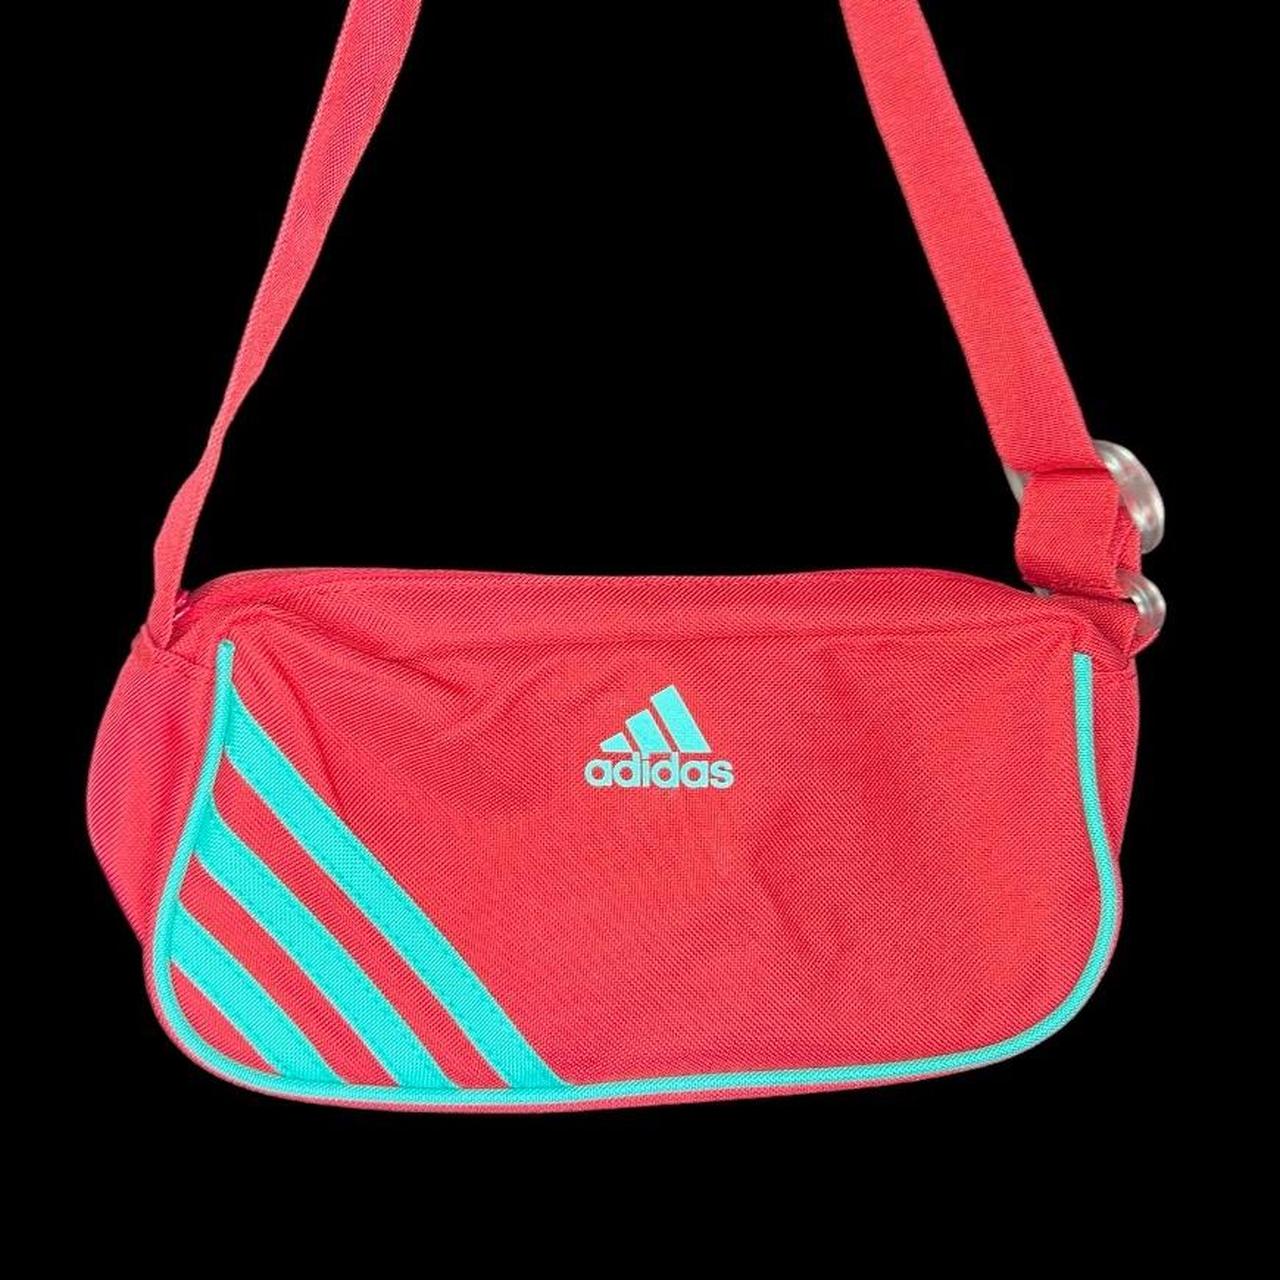 Adidas Women's Red Bag (2)